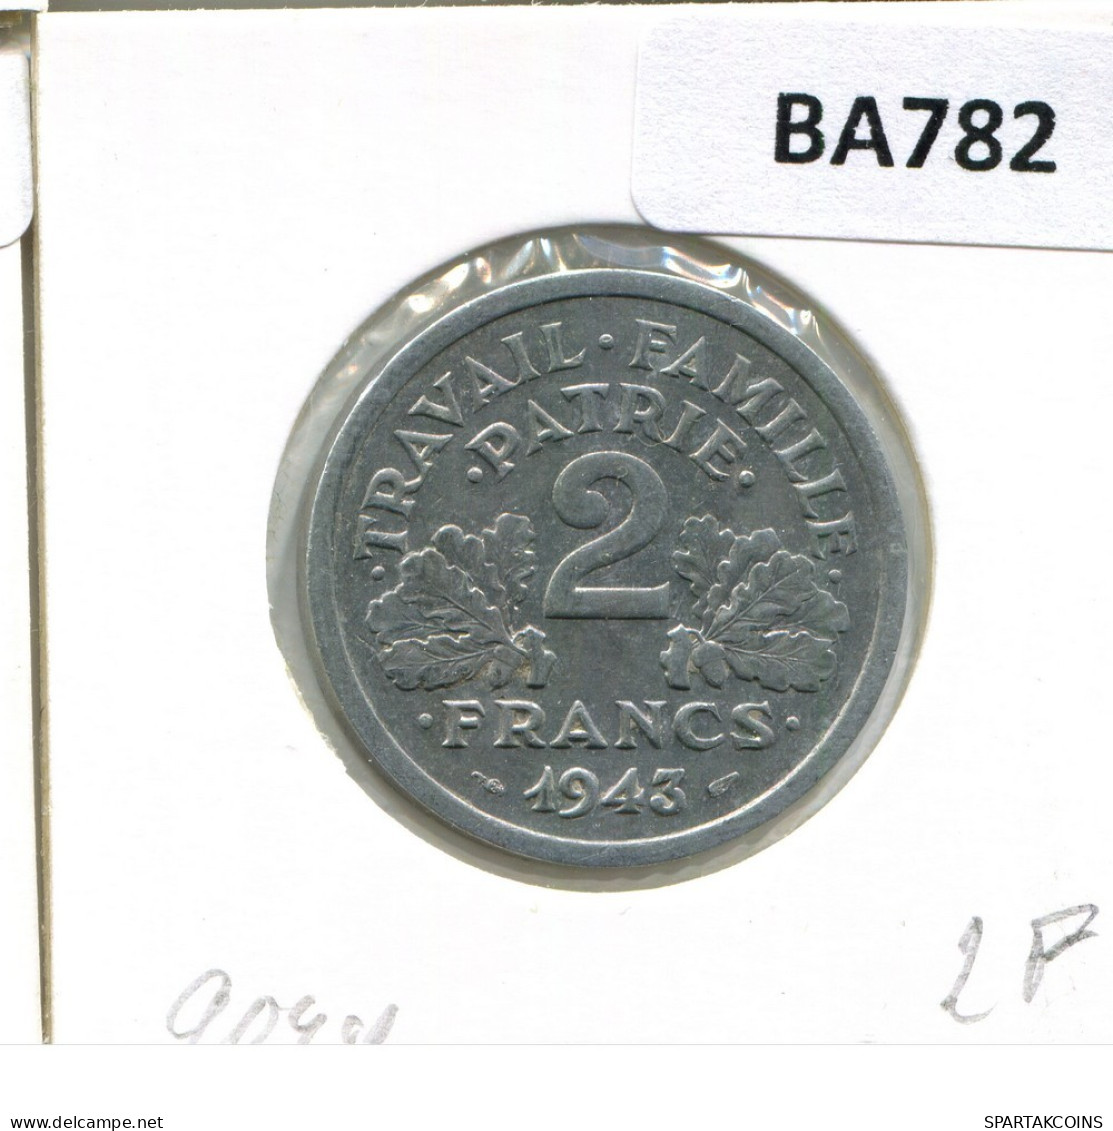 2 FRANCS 1943 FRANCE French Coin #BA782.U.A - 2 Francs